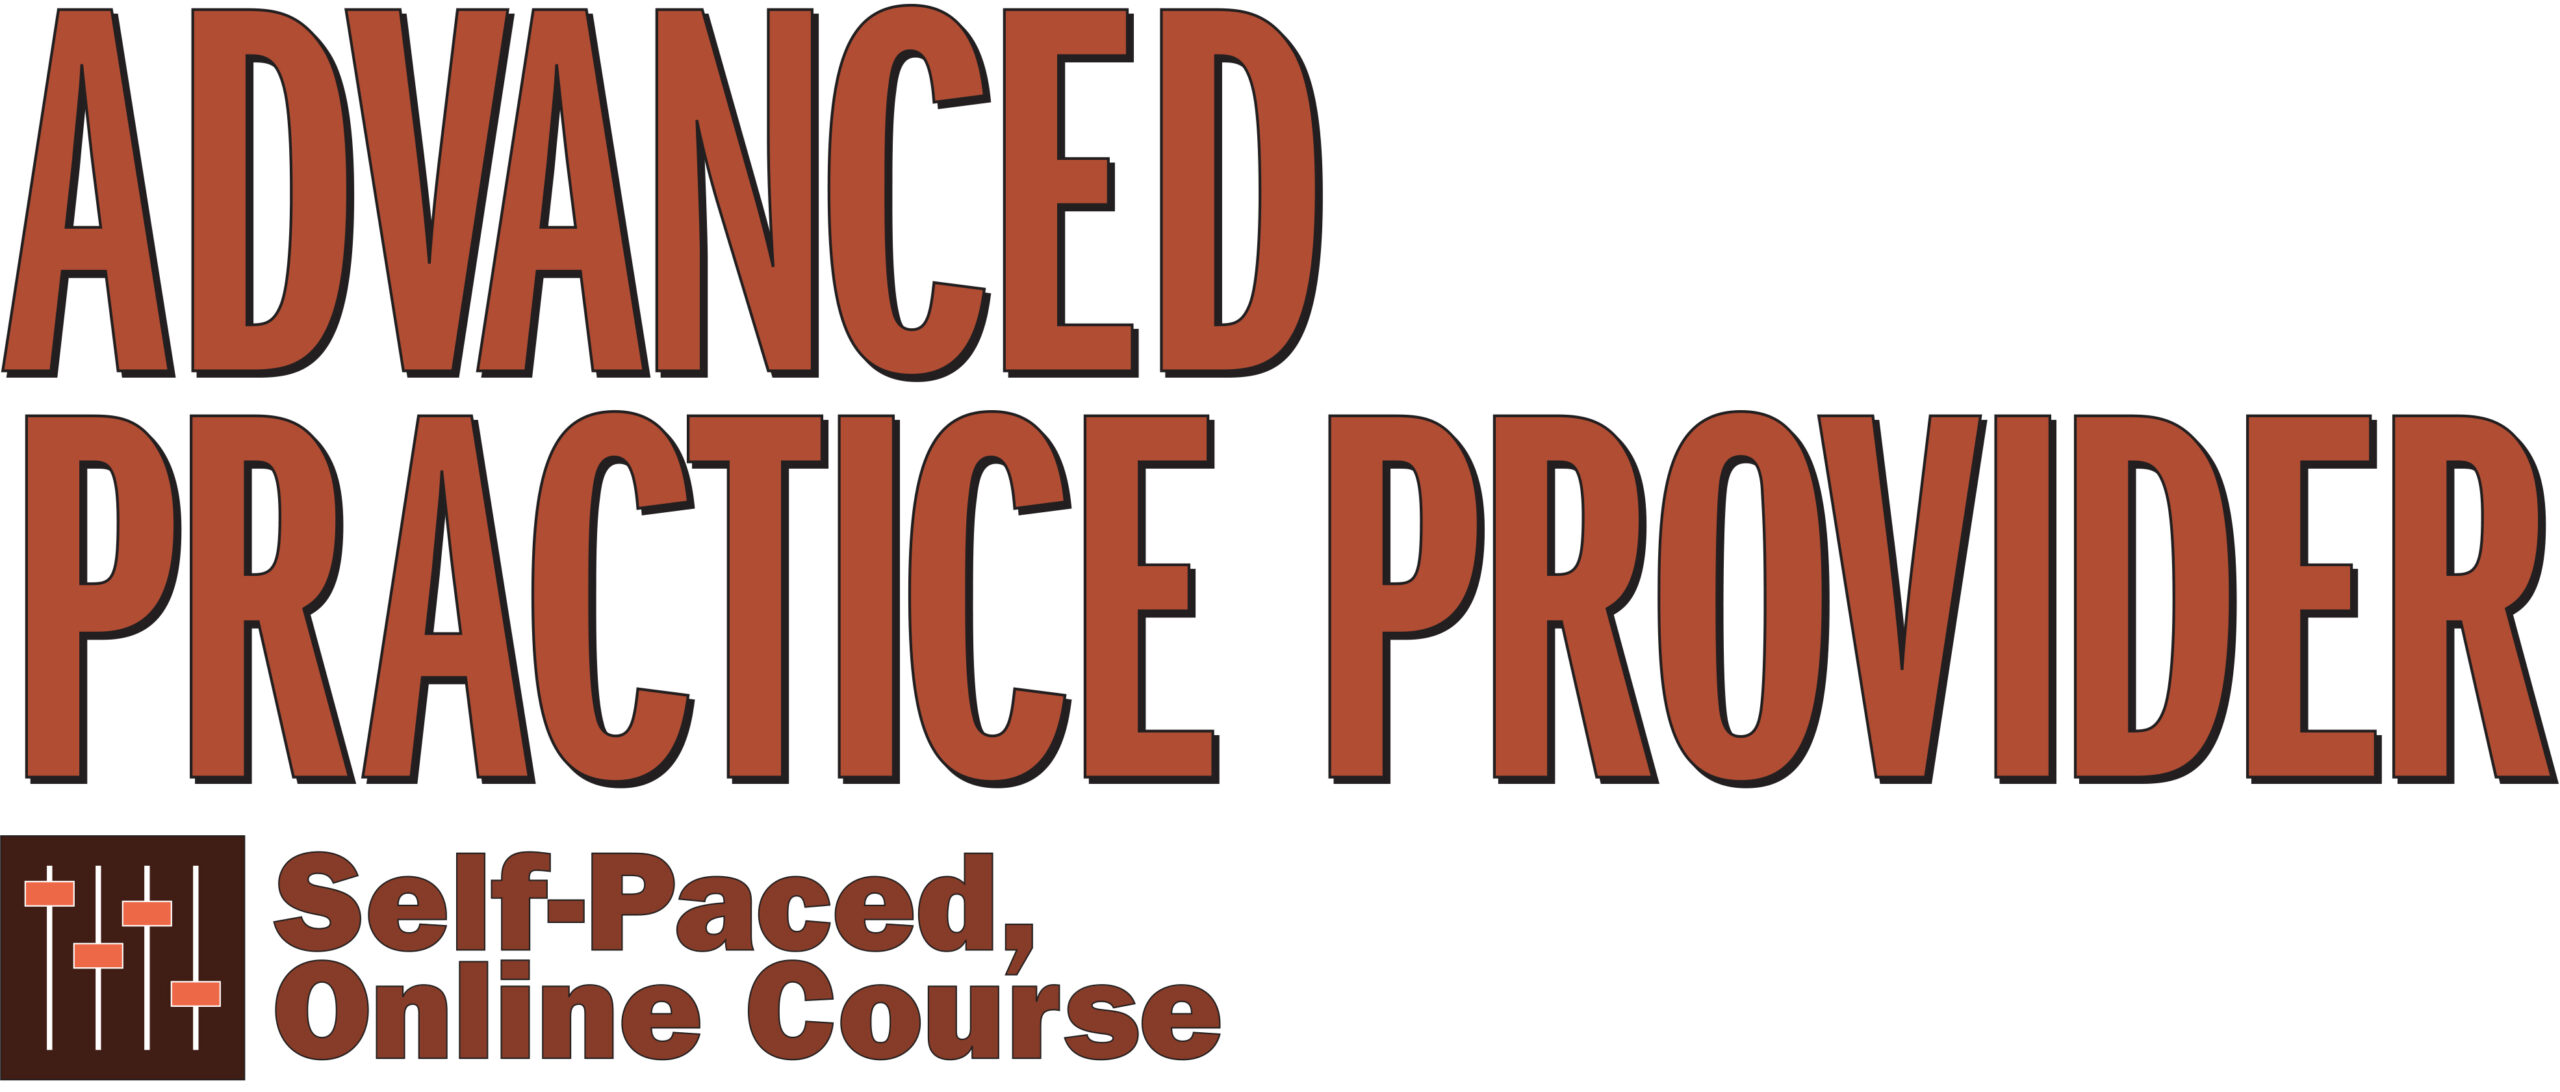 Advanced Practice Provider Logo